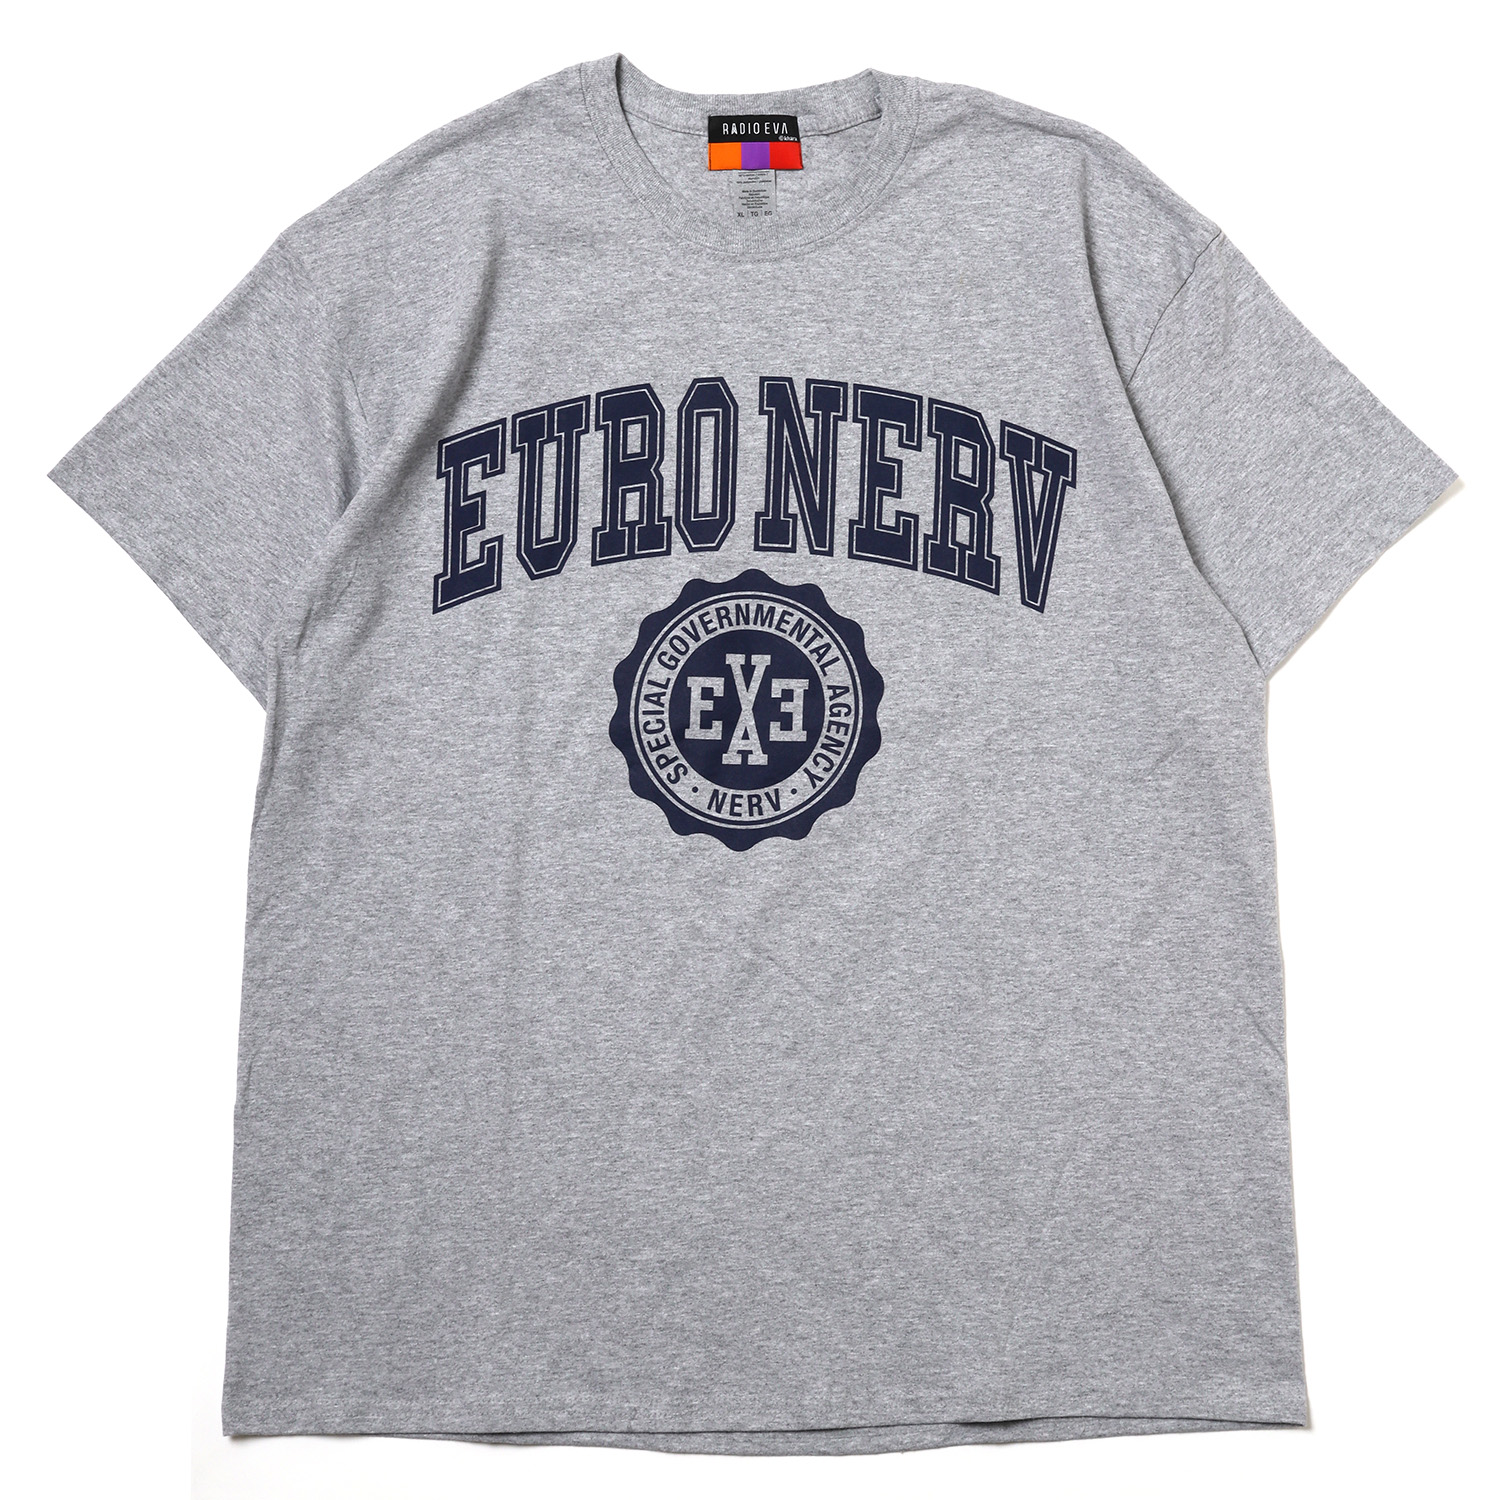 RADIO EVA 841 EURO NERV COLLEGE T-Shirt